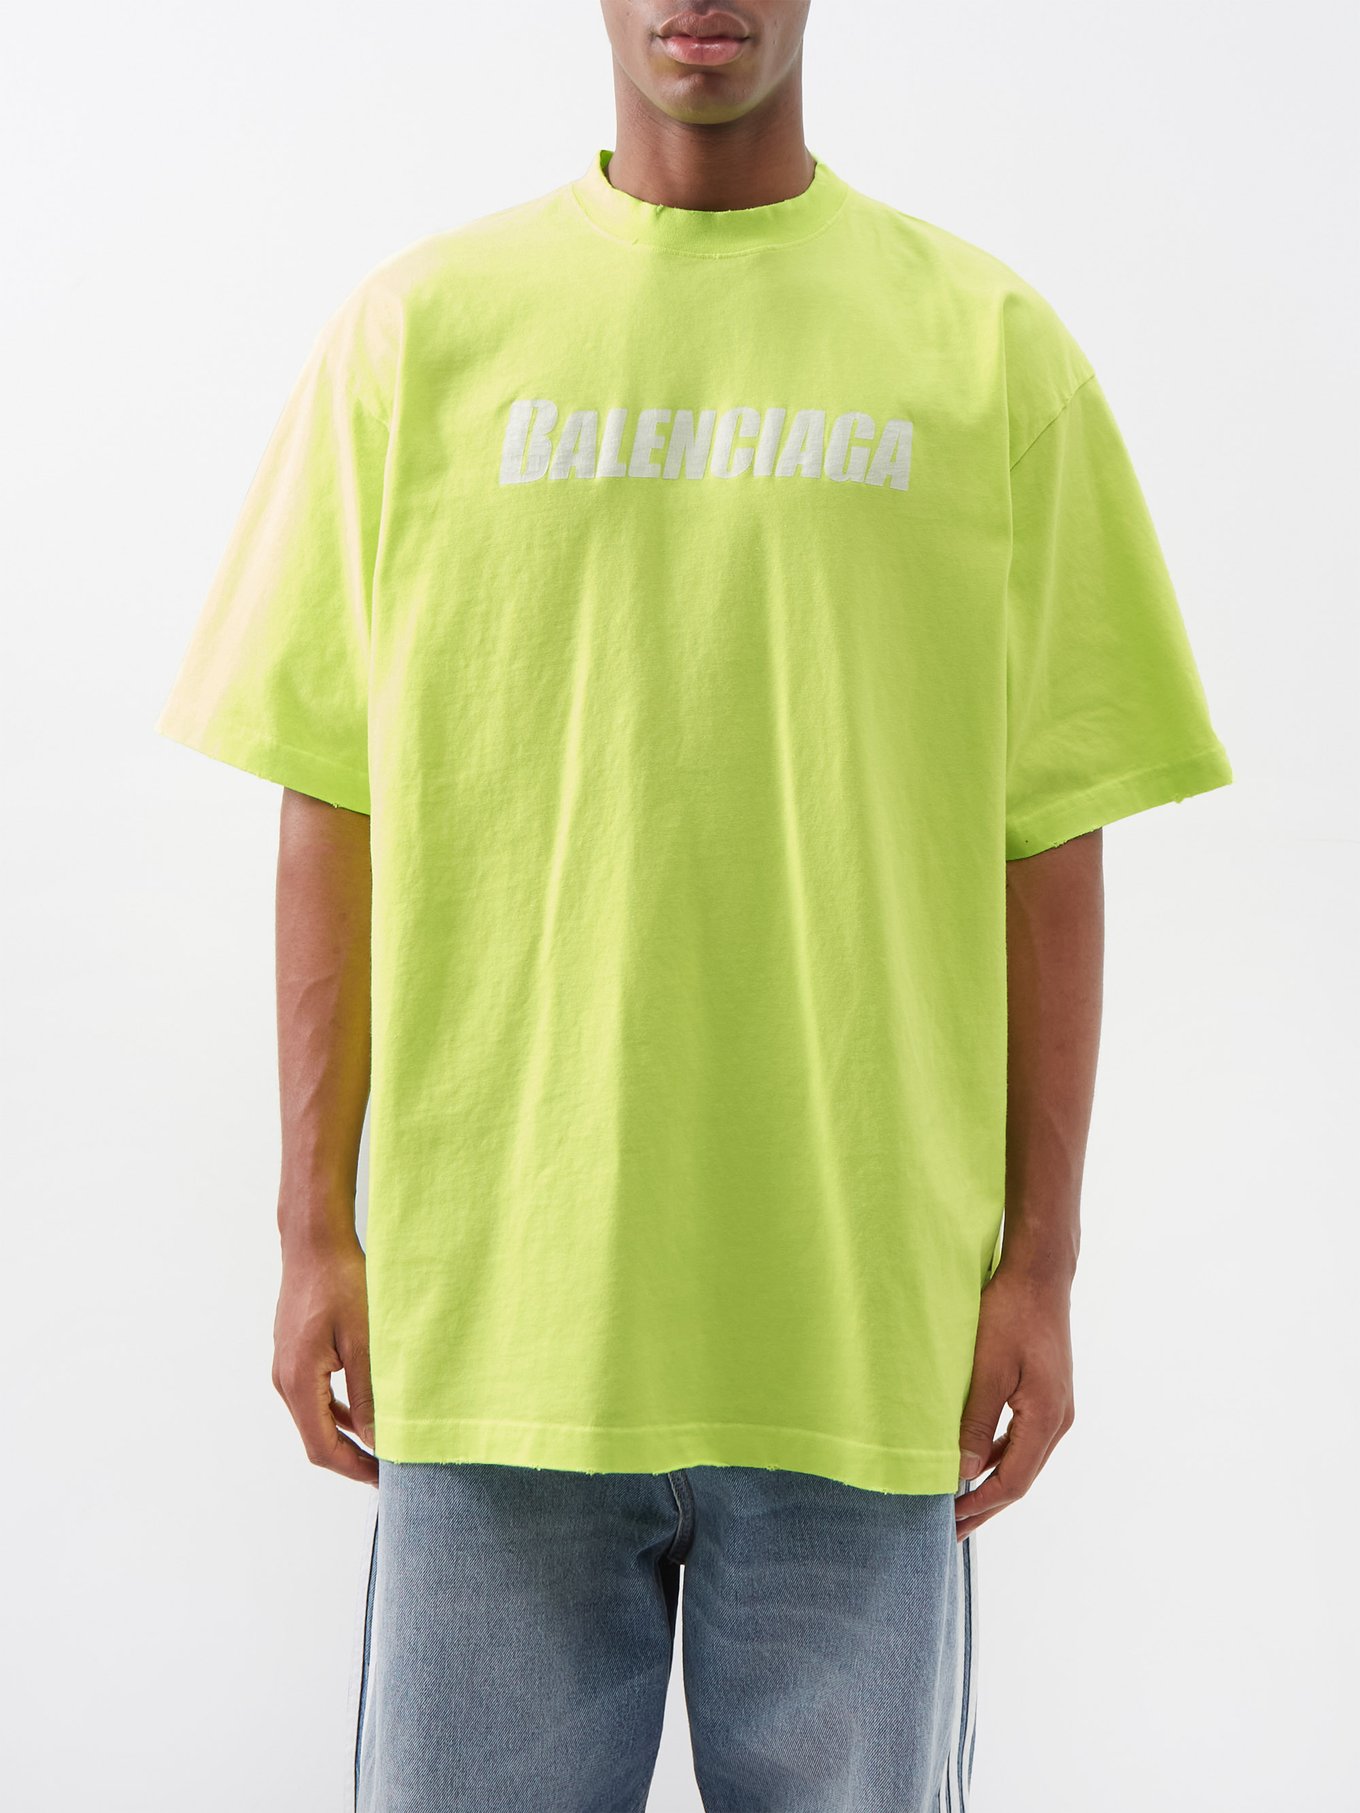 Forsømme Synlig Håbefuld Yellow Logo-print distressed jersey oversized T-shirt | Balenciaga |  MATCHESFASHION US